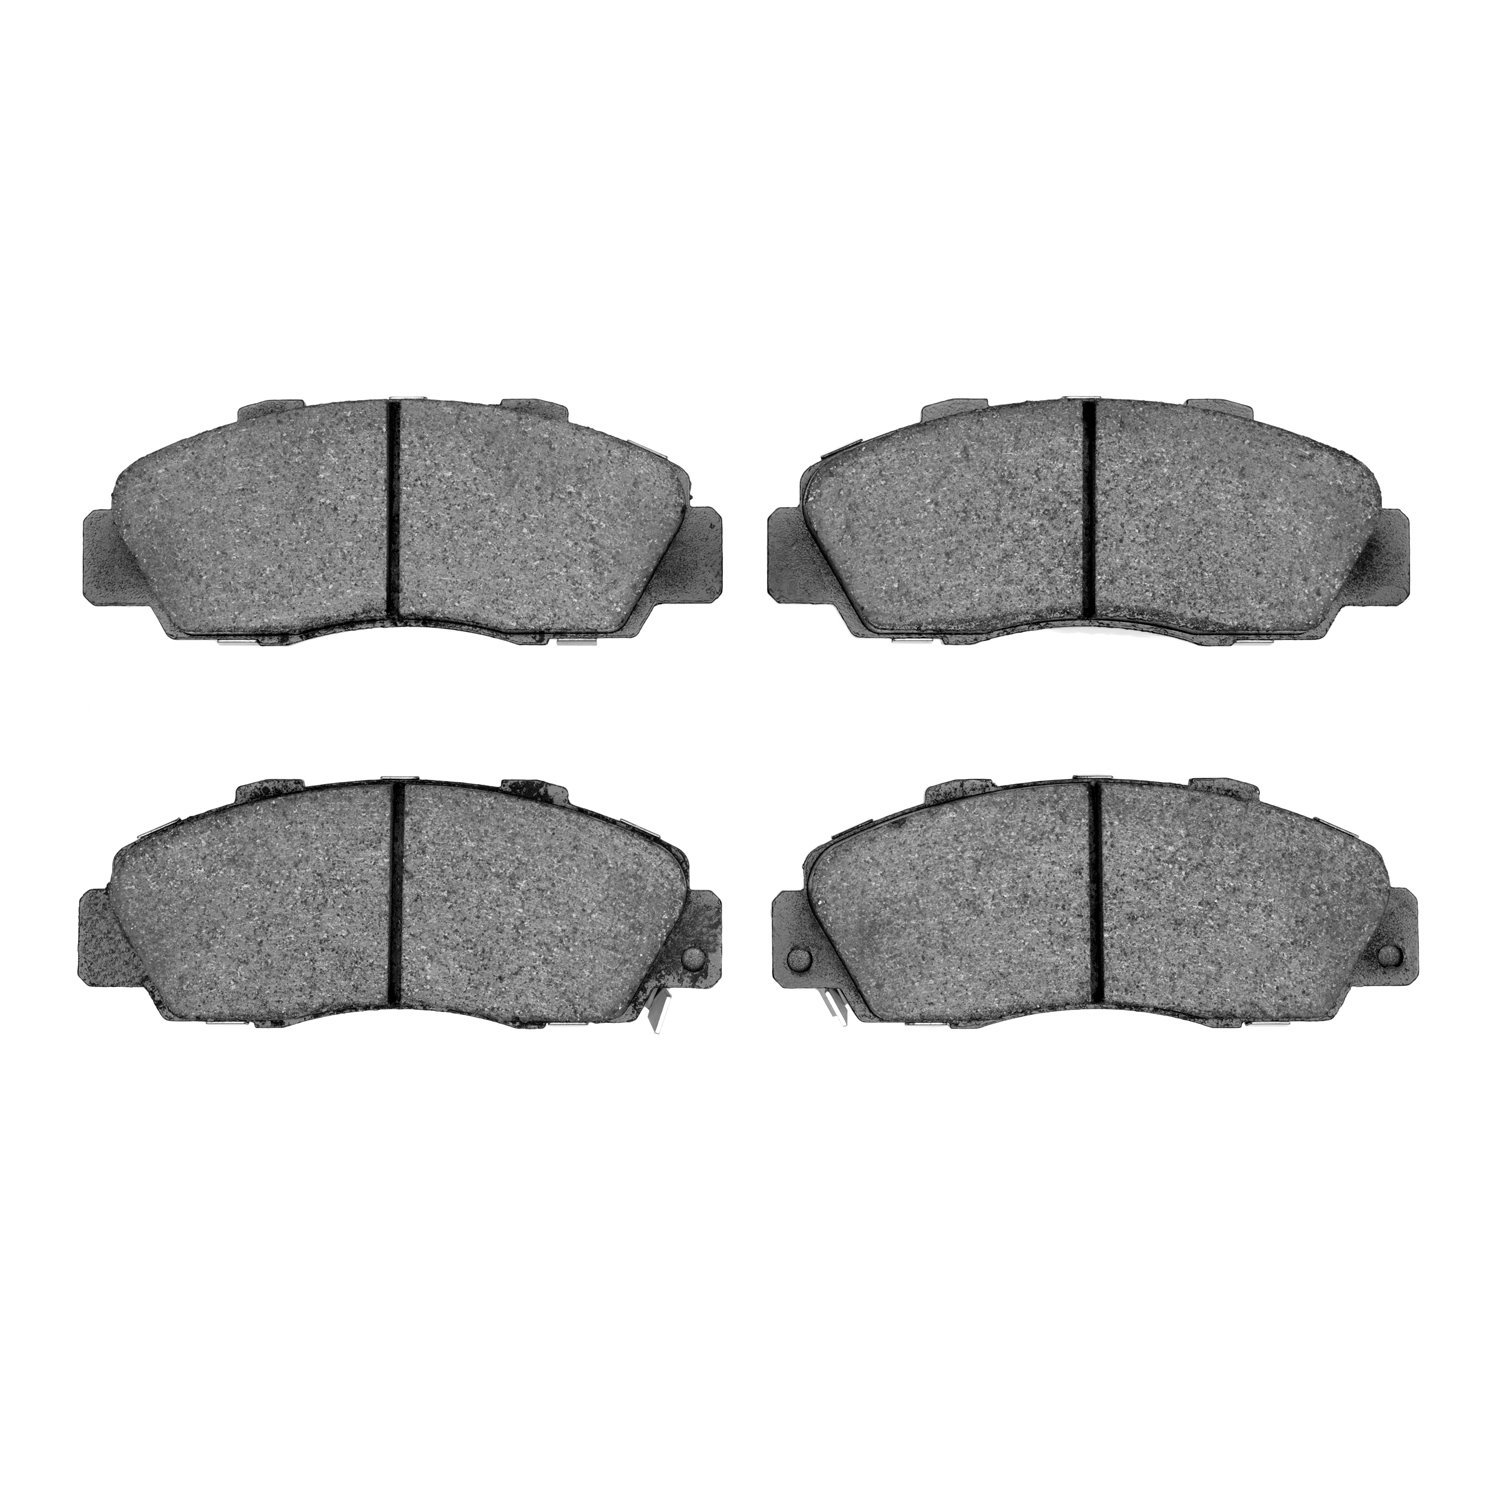 1600-0503-00 5000 Euro Ceramic Brake Pads, 1991-2005 Multiple Makes/Models, Position: Front